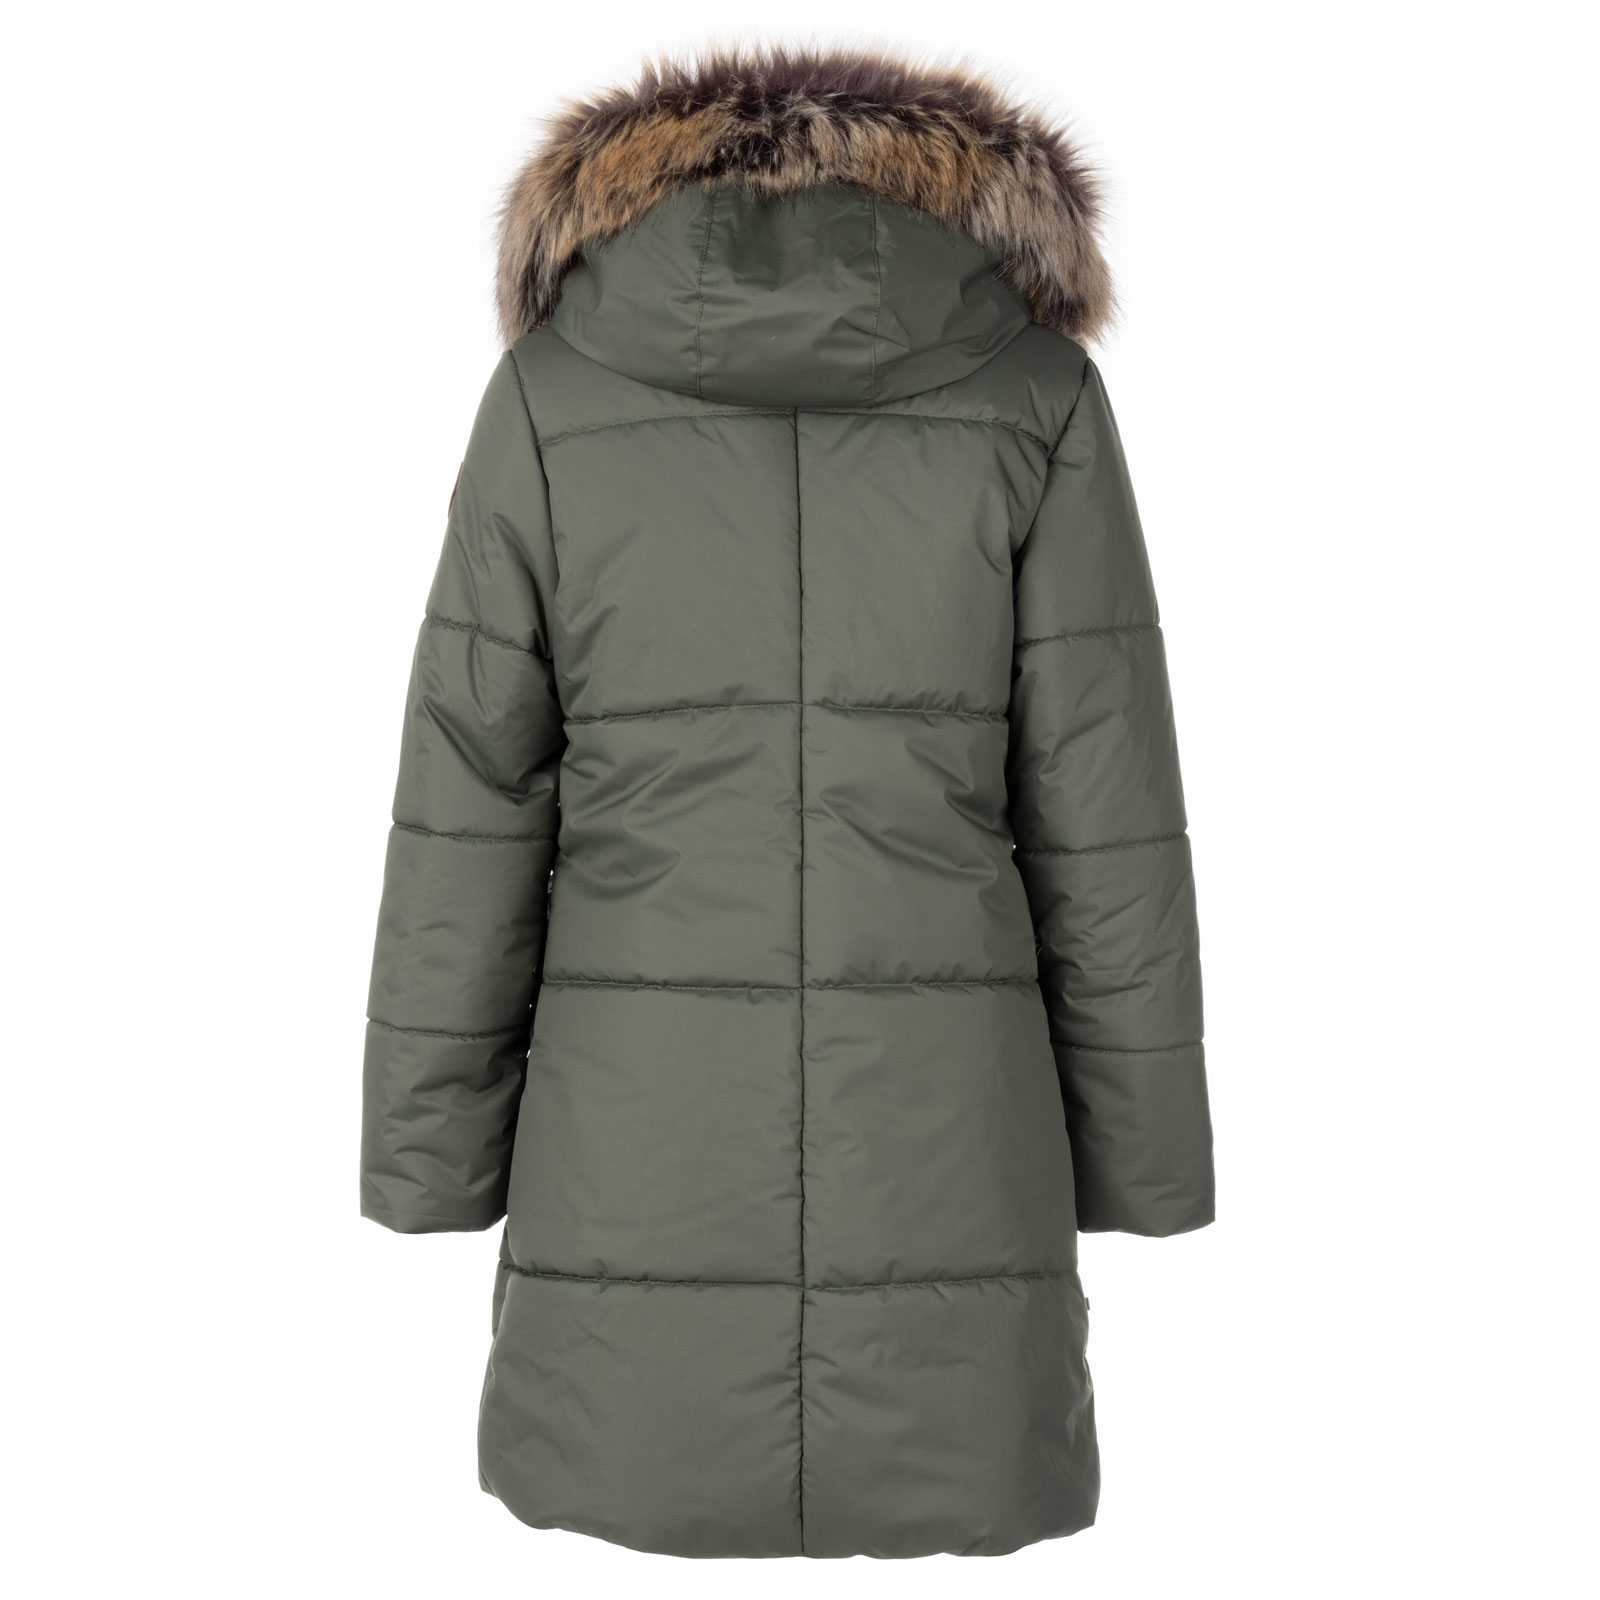 Le-Company winter coat - Lenne